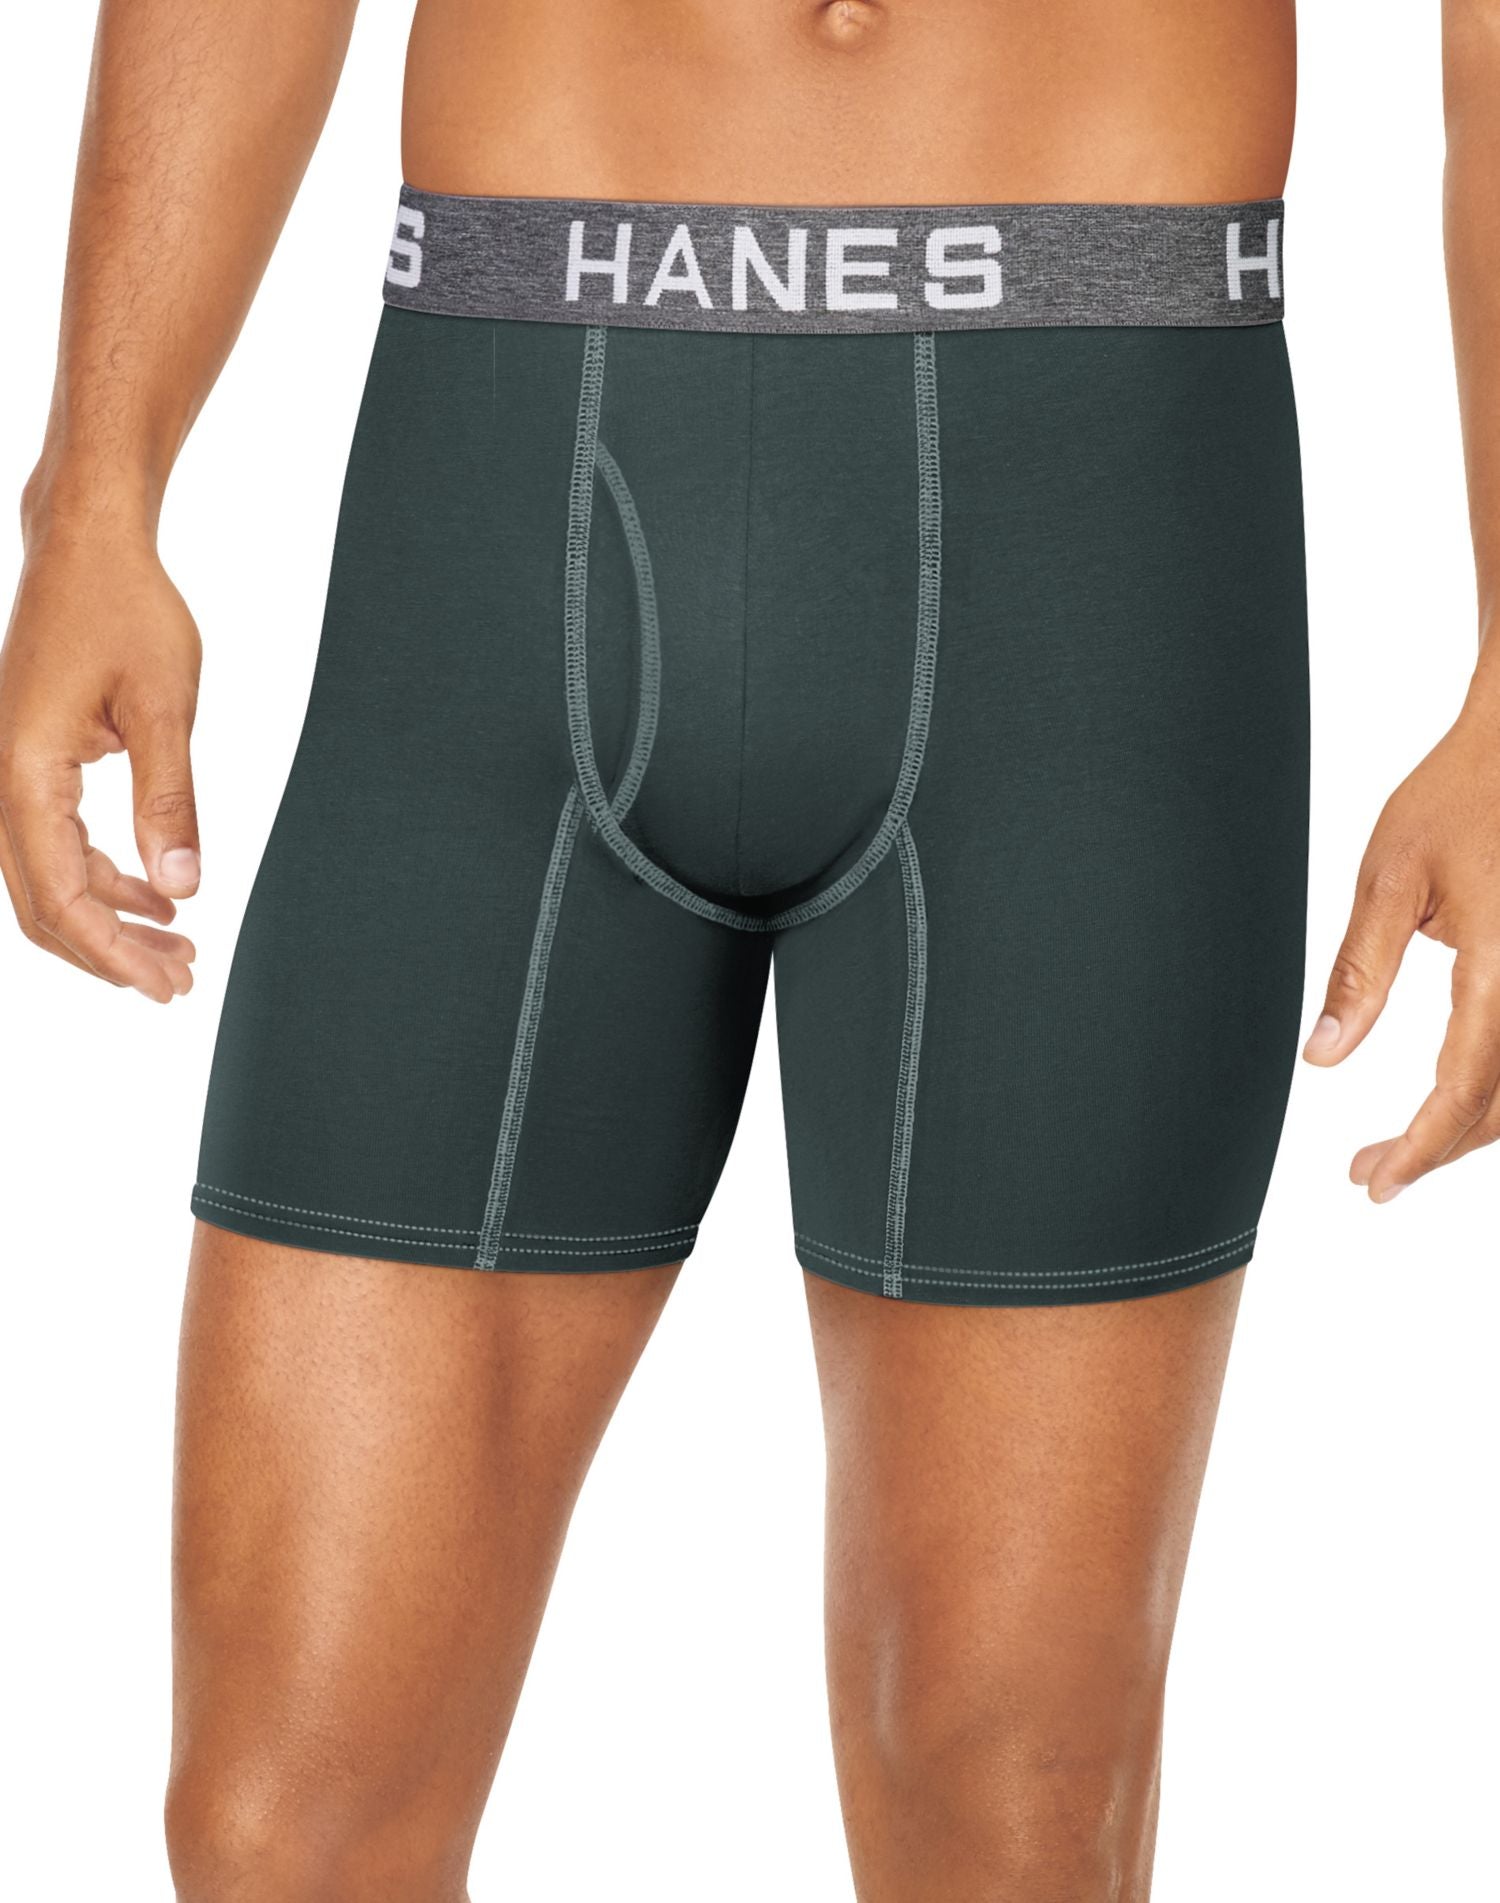 Men's Assorted Comfort Flex Fit Tagless Trunks - 3 Pk